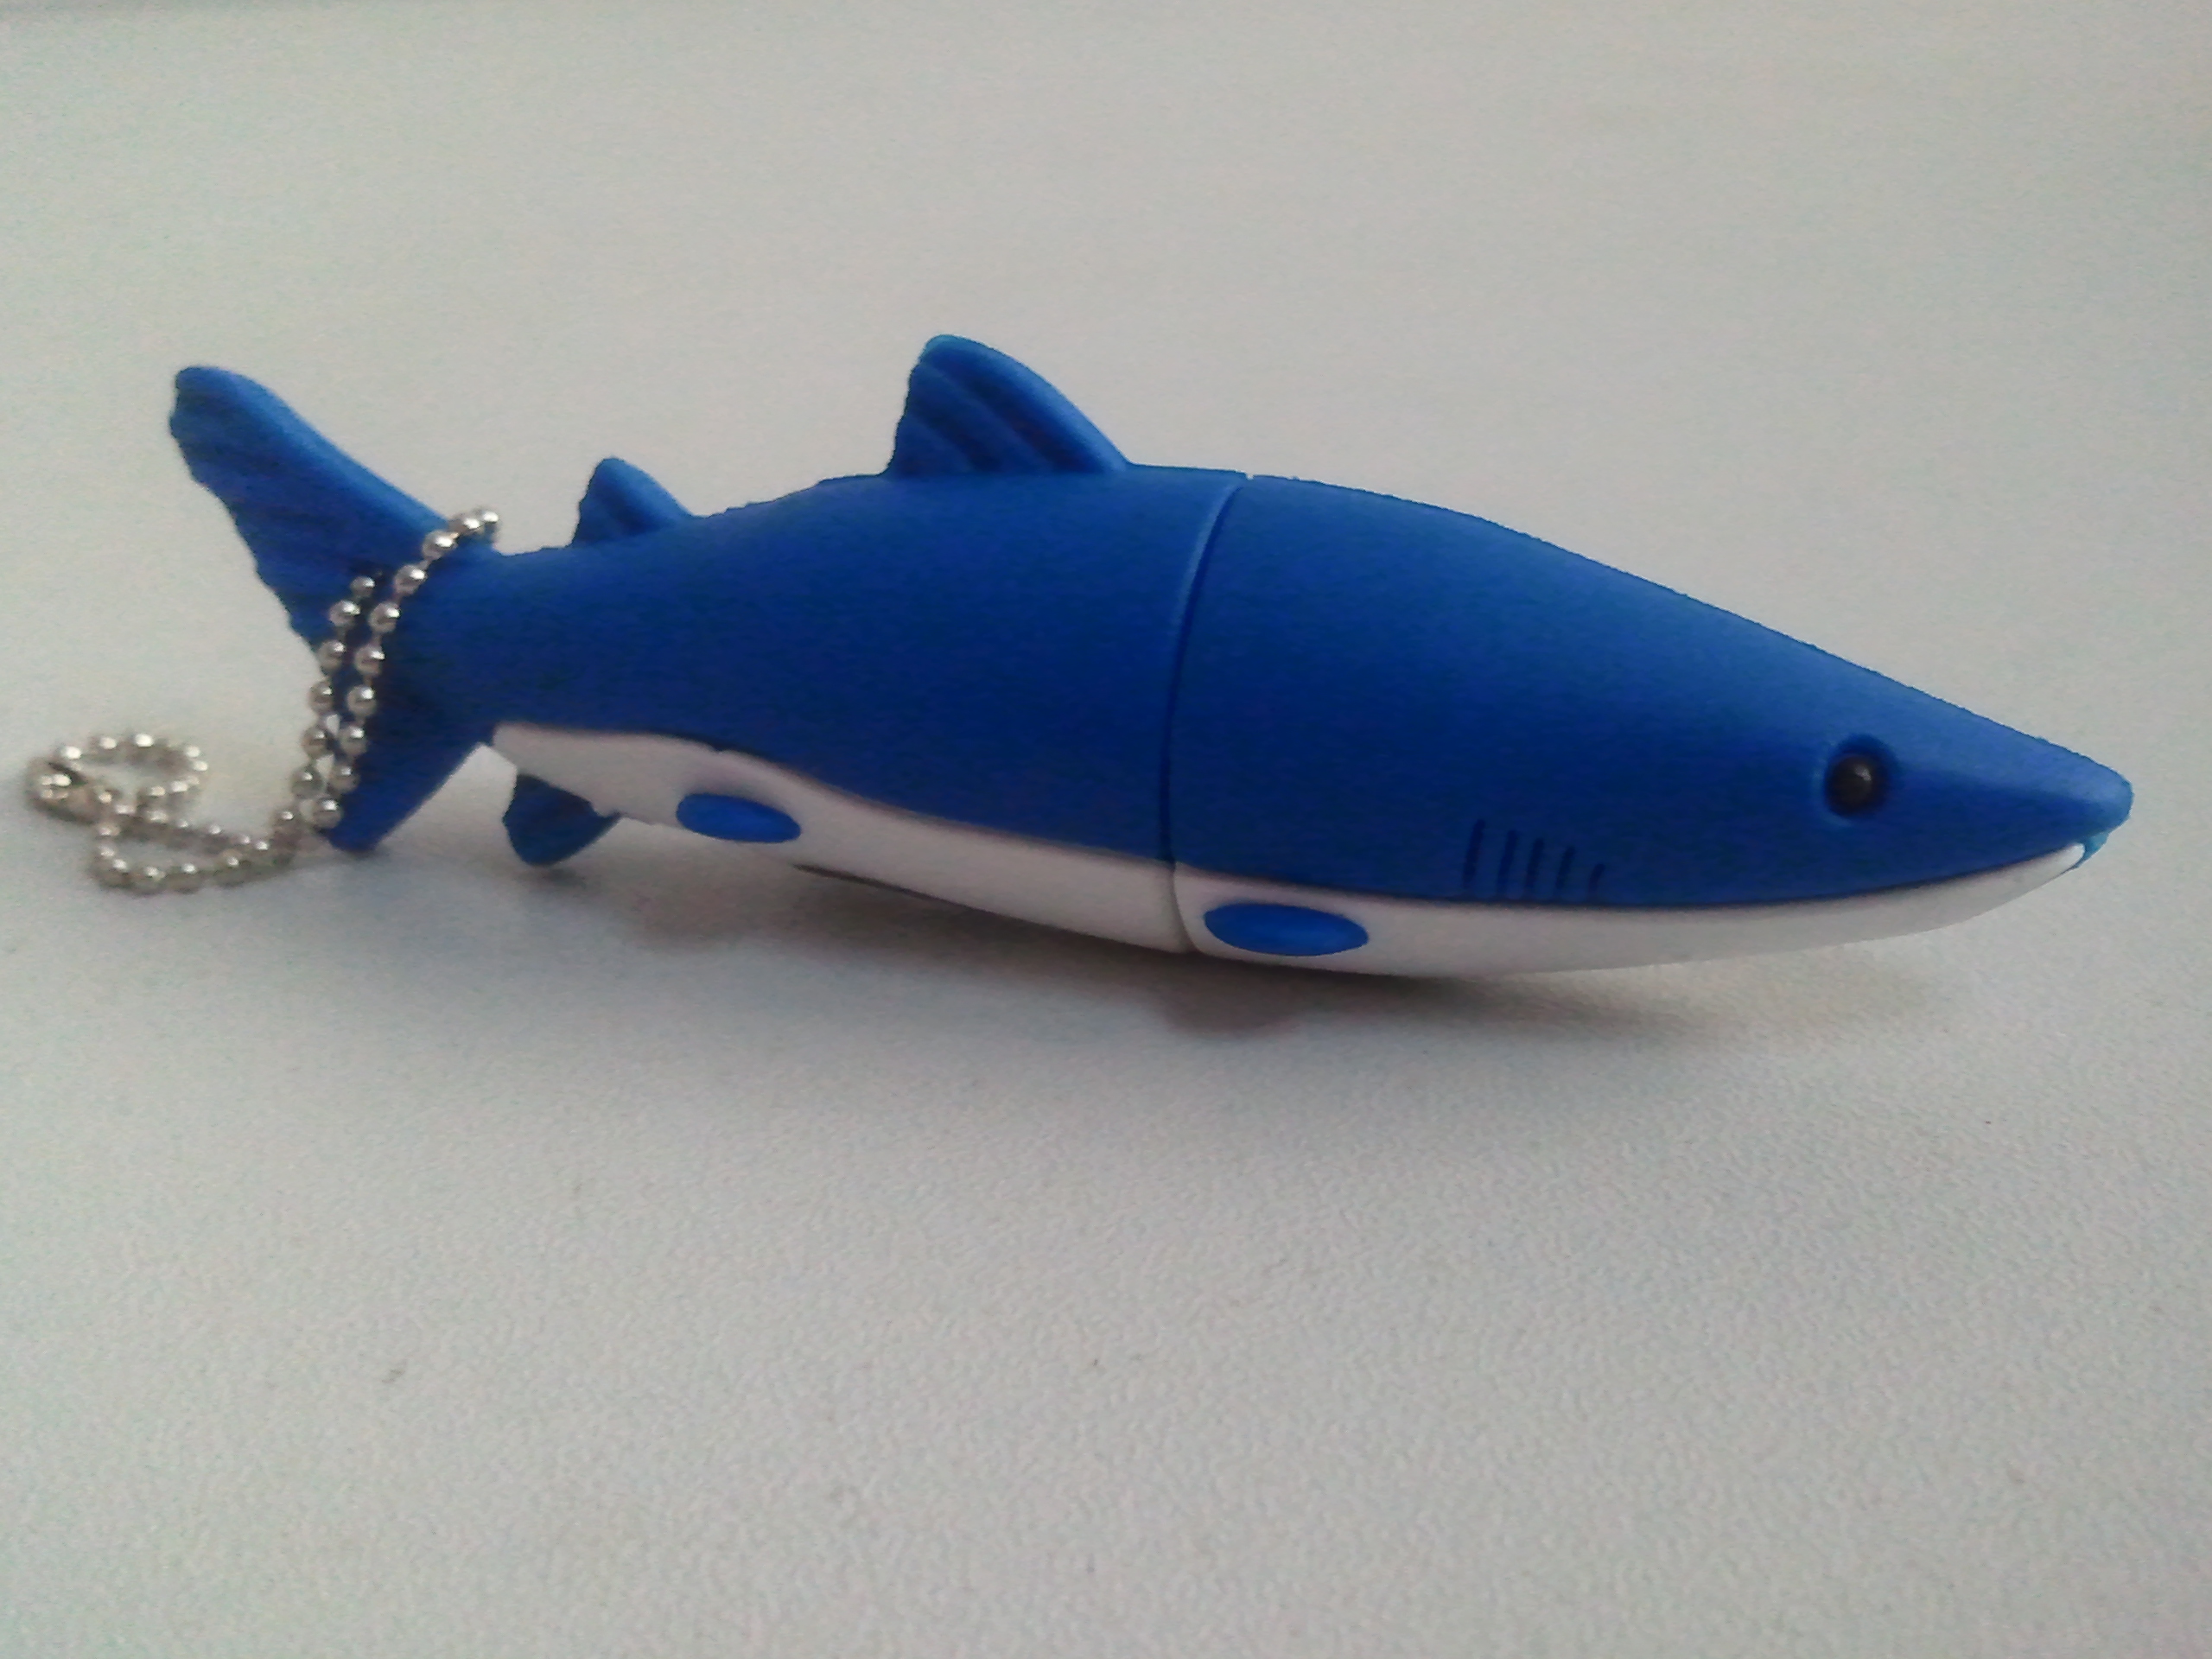 8GB Cartoon Shark USB Flash Drive